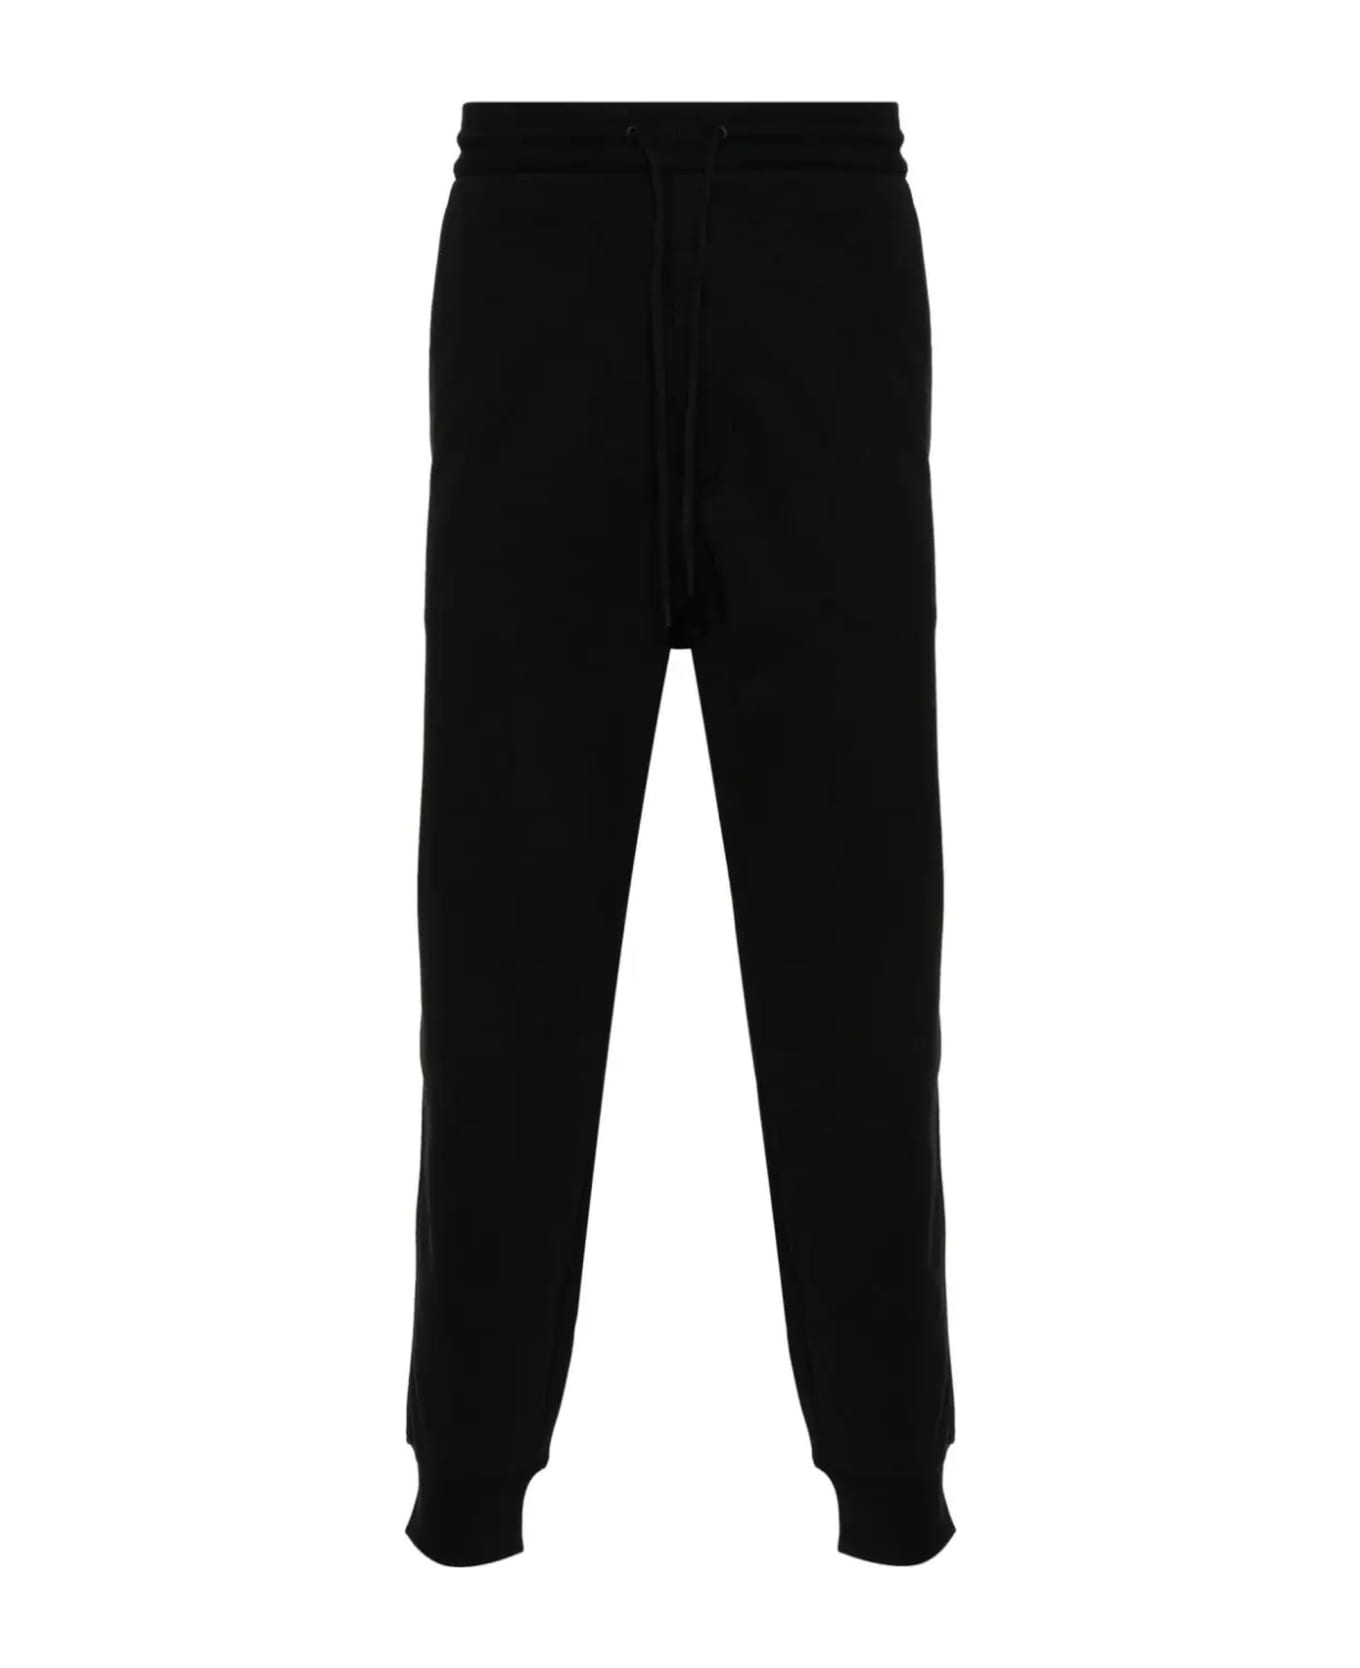 Y-3 Trousers Black - Black スウェットパンツ